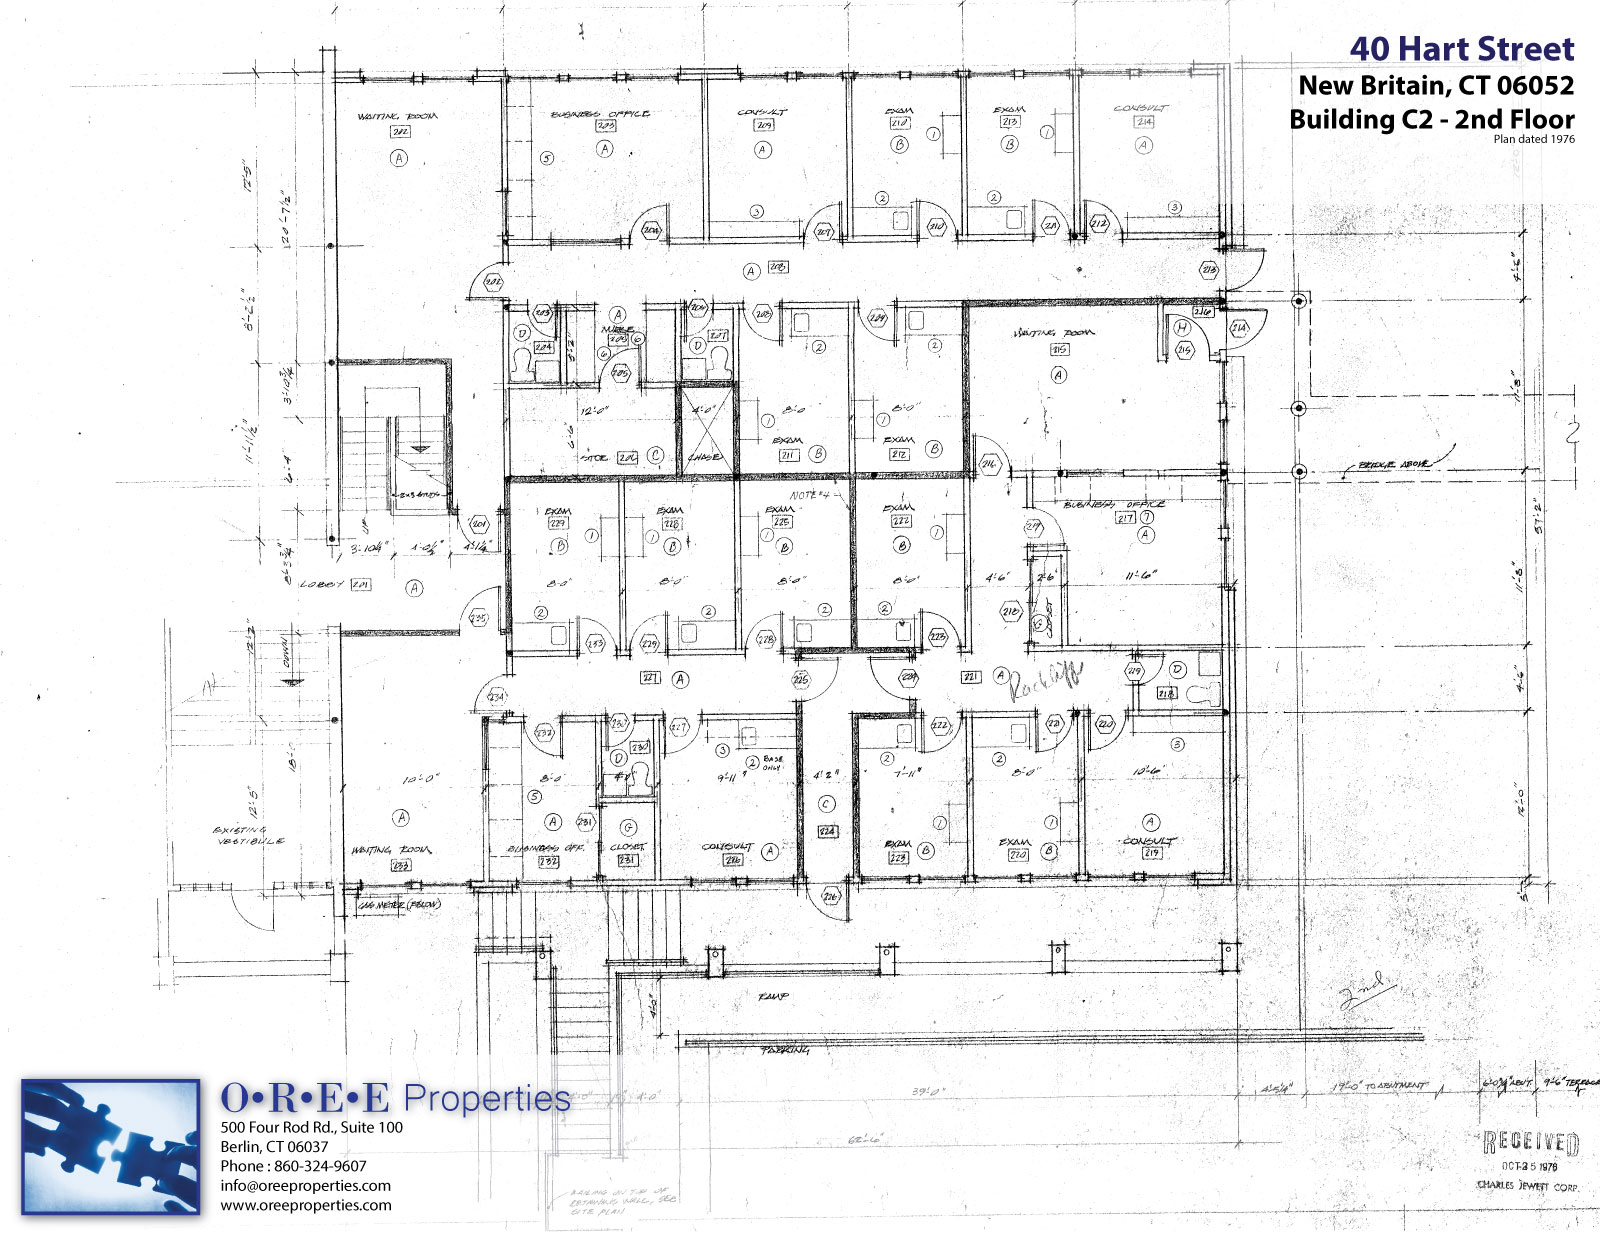 40 Hart St., New Britain, Building C2 - 2nd Floor Plan